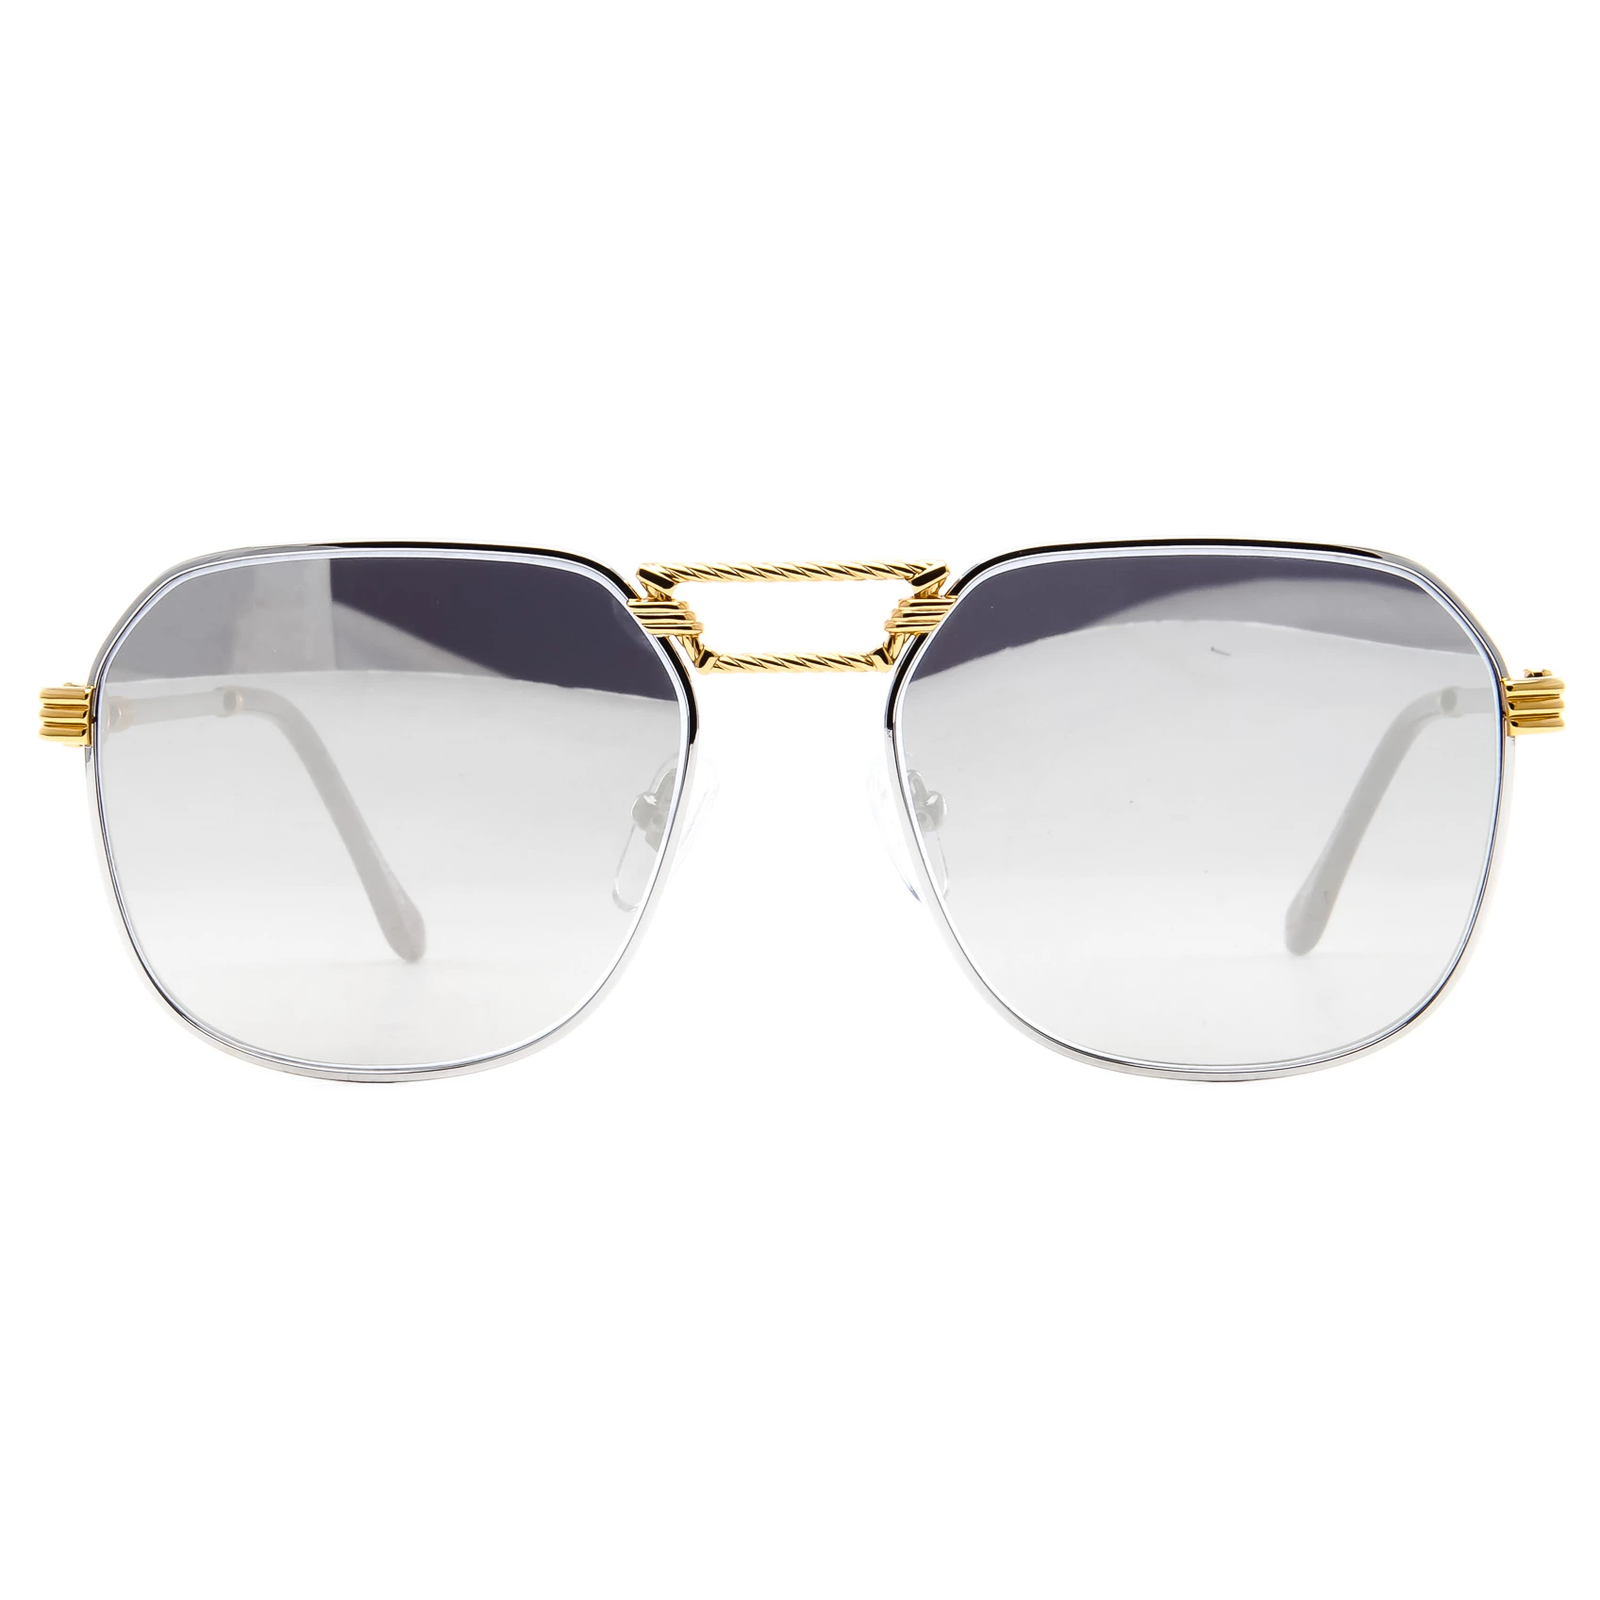 Vintage Frames Company CEO Masterpiece 24kt Sunglasses